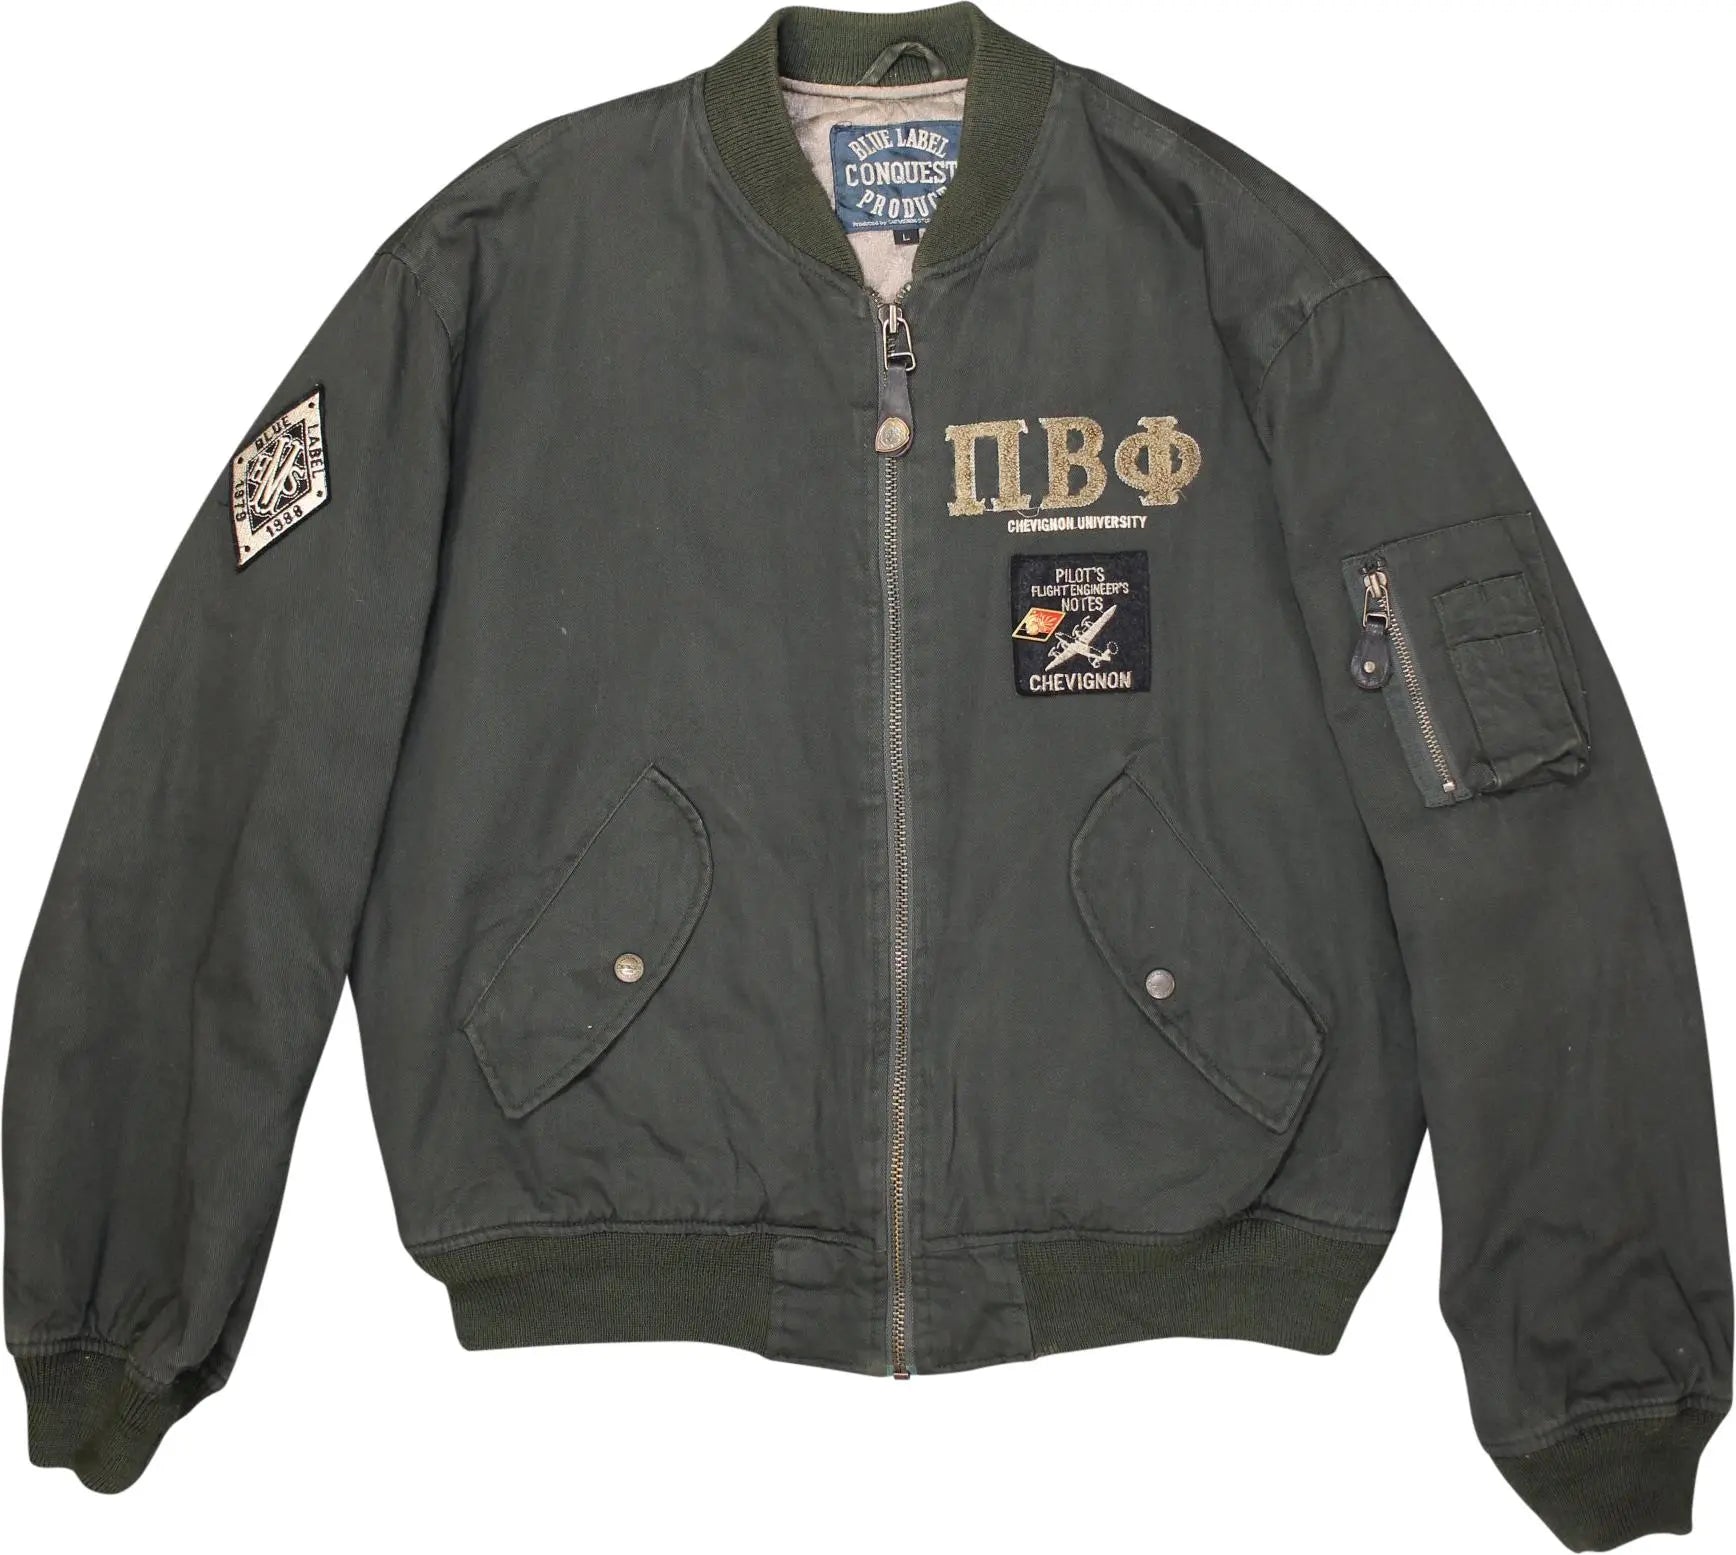 Blue Label - Blue Label Conquest Product Pilot Bomber Jacket- ThriftTale.com - Vintage and second handclothing